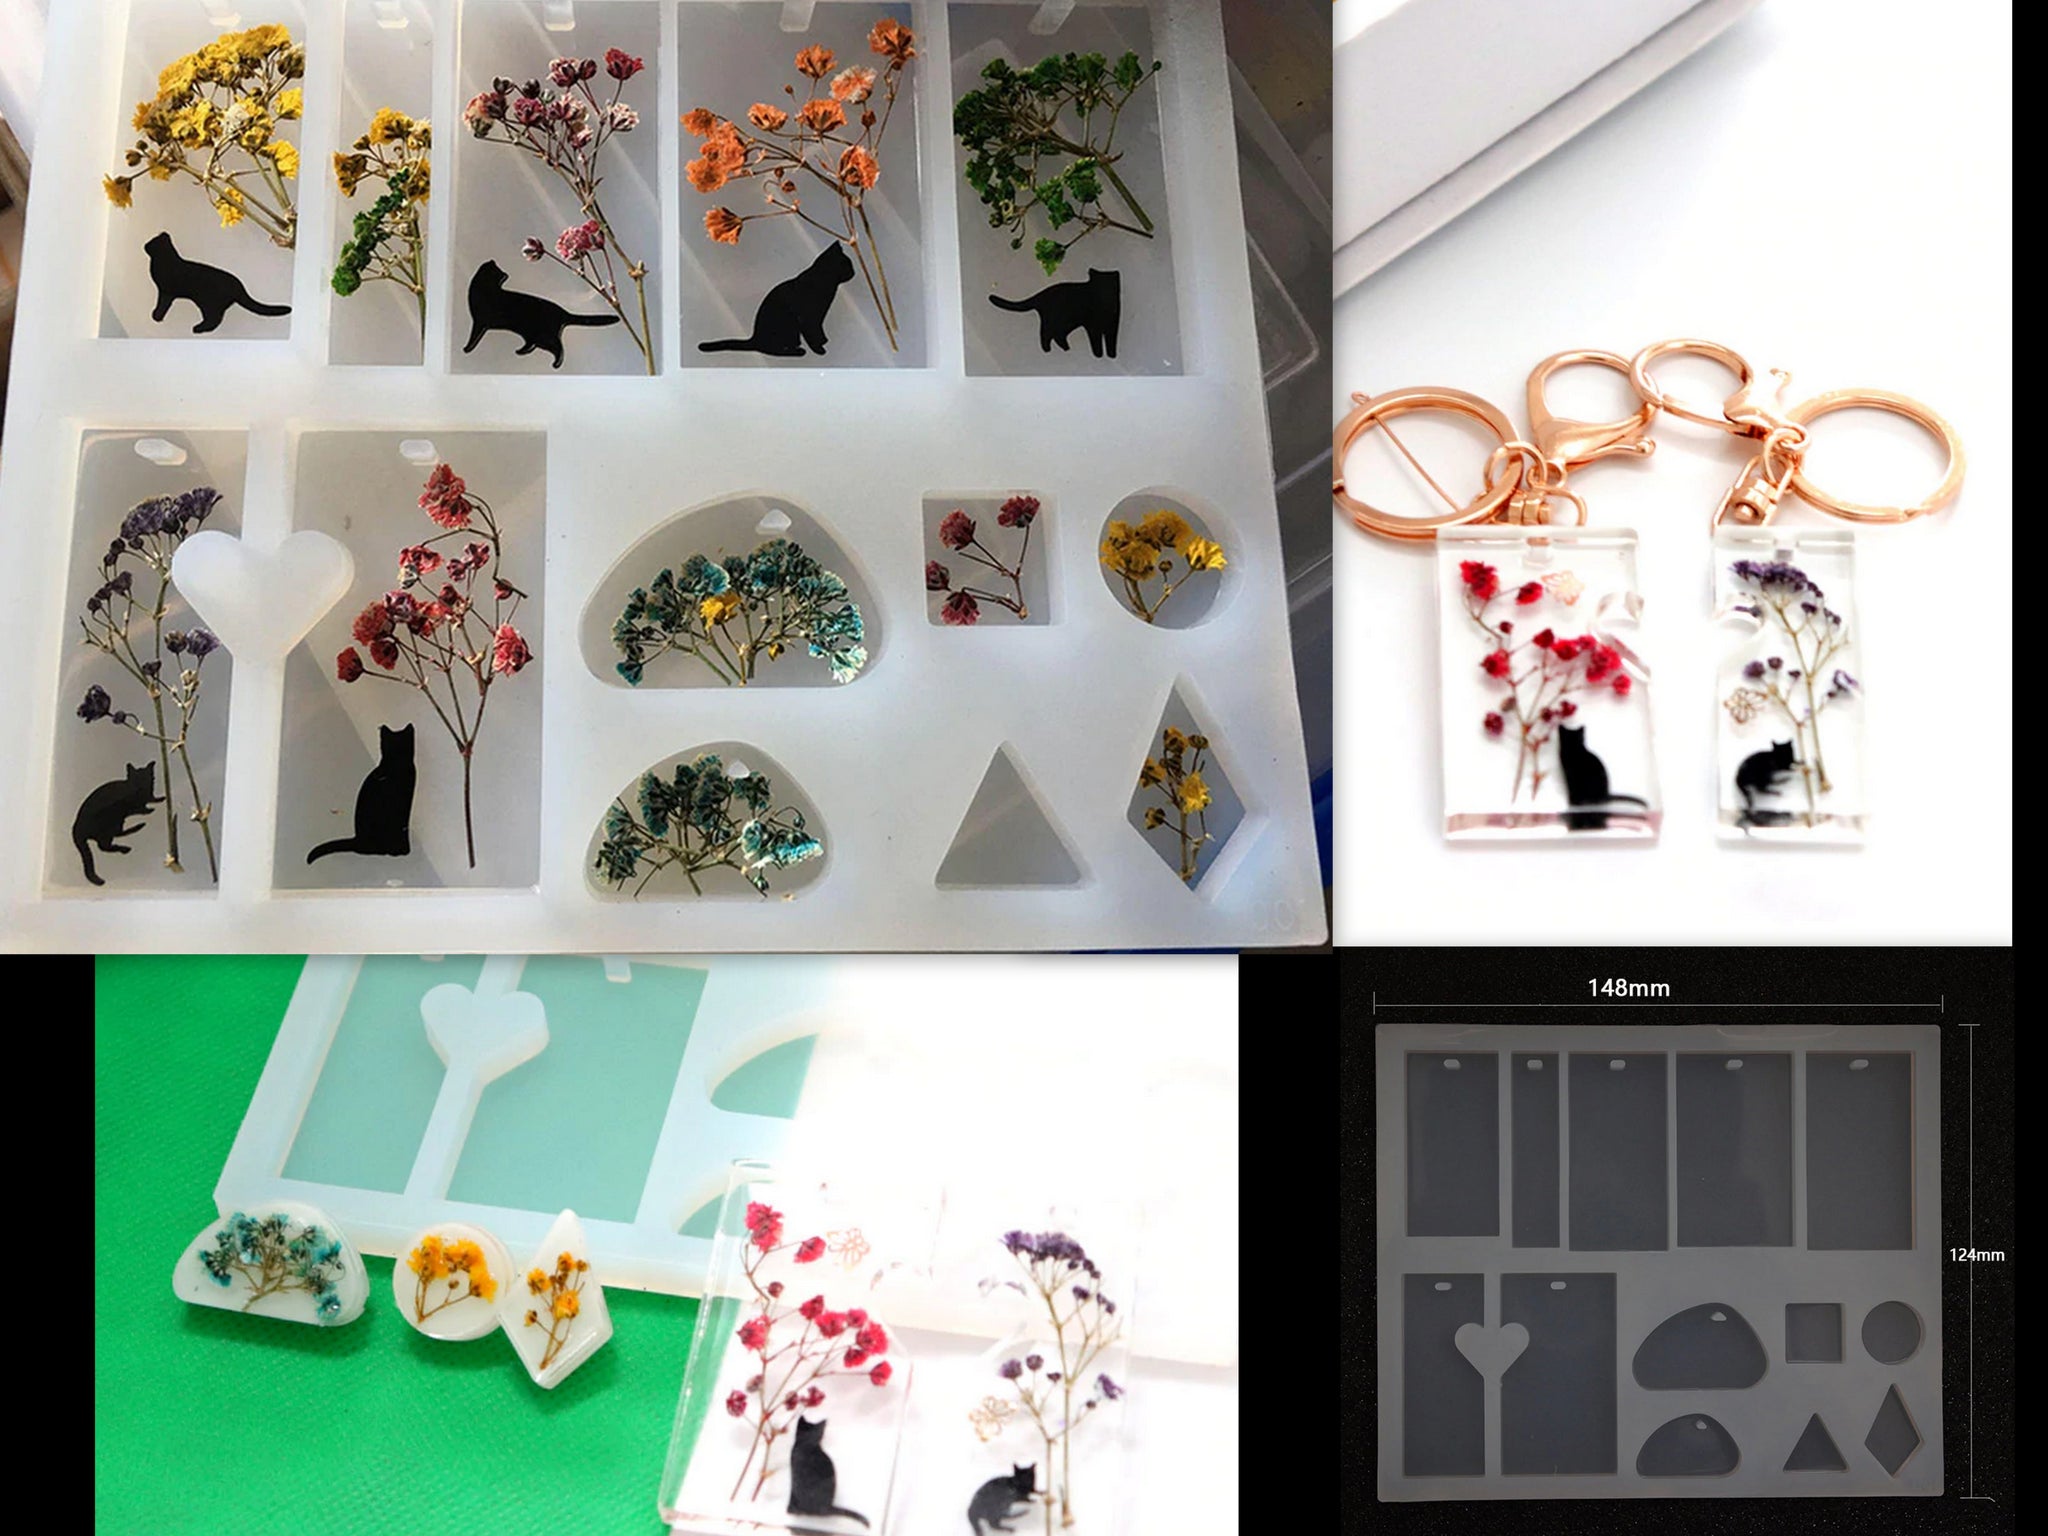 Buy Resin Craft Jewelry Supplies Online! – Khushi Handicrafts